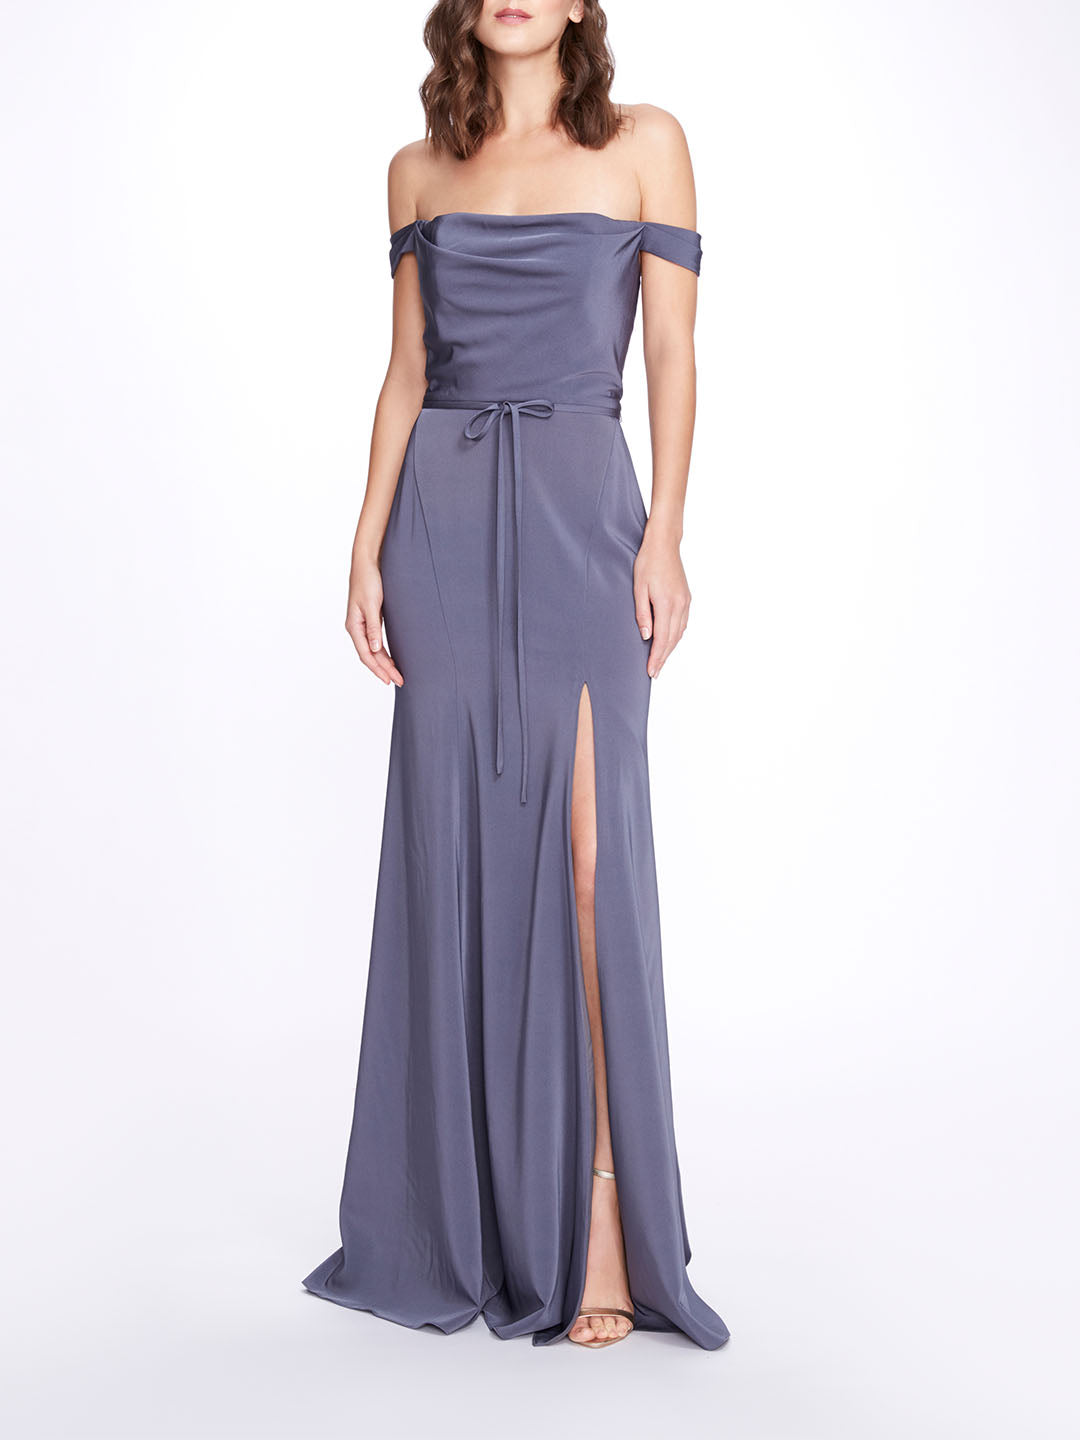 David's Bridal Steel Blue Bridesmaid Dress Size 8 - $39 (60% Off